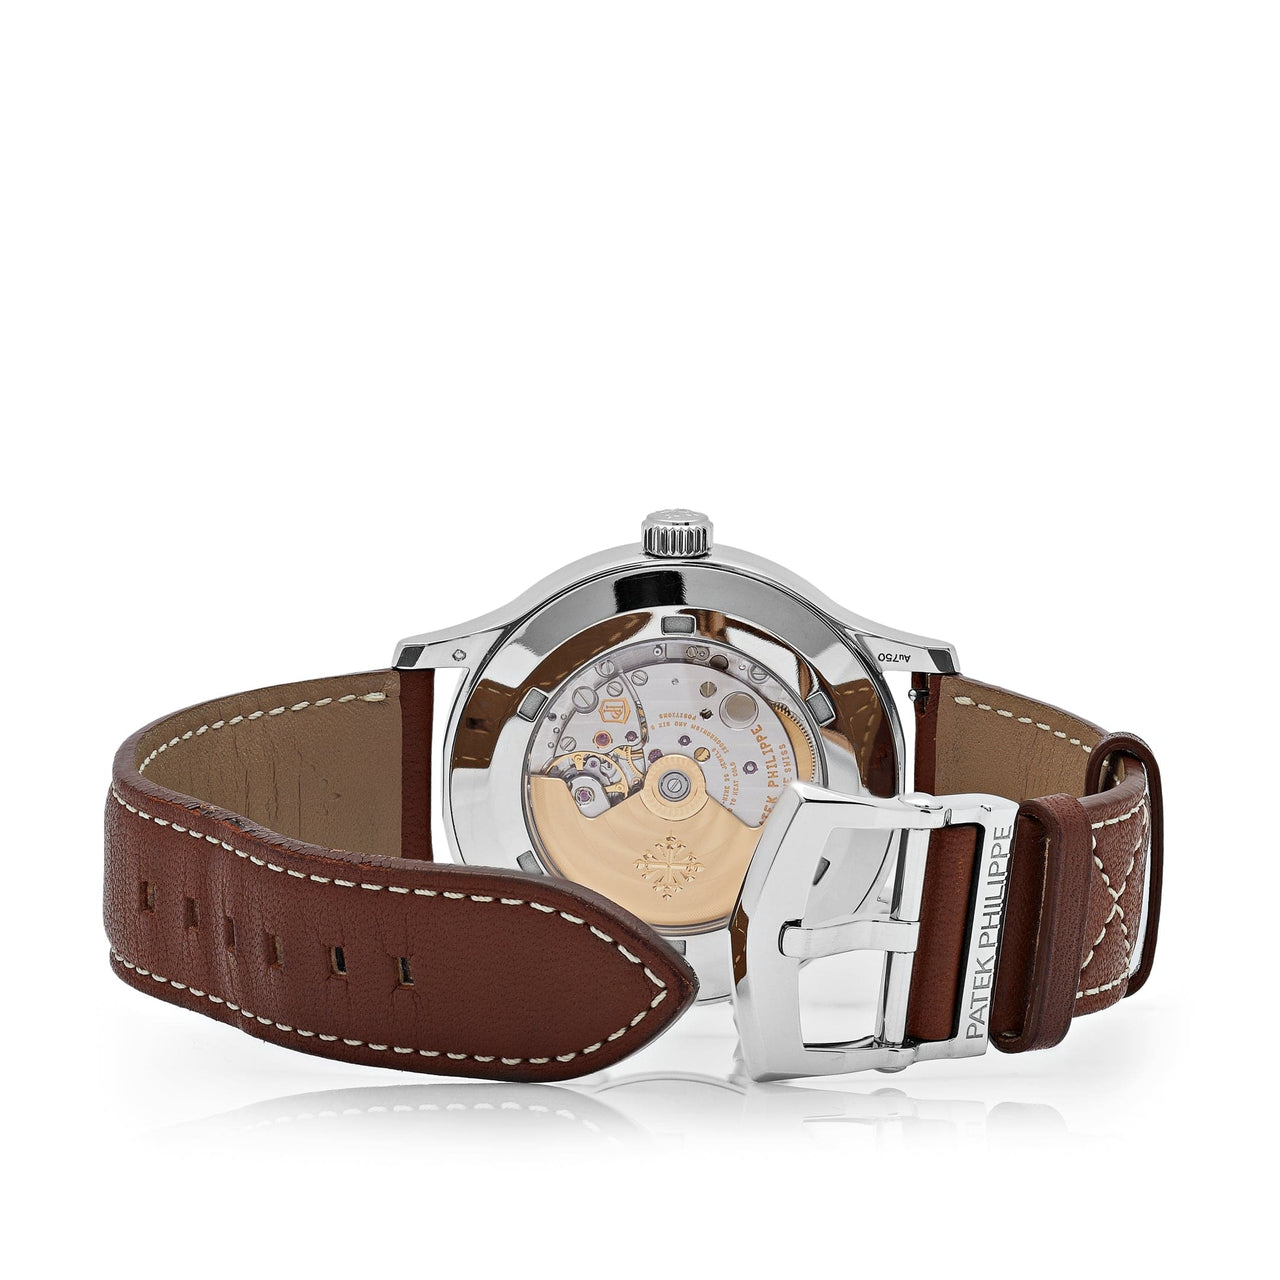 Luxury Watch Patek Philippe Calatrava Pilot Travel Time White Gold 5524G-001 Wrist Aficionado